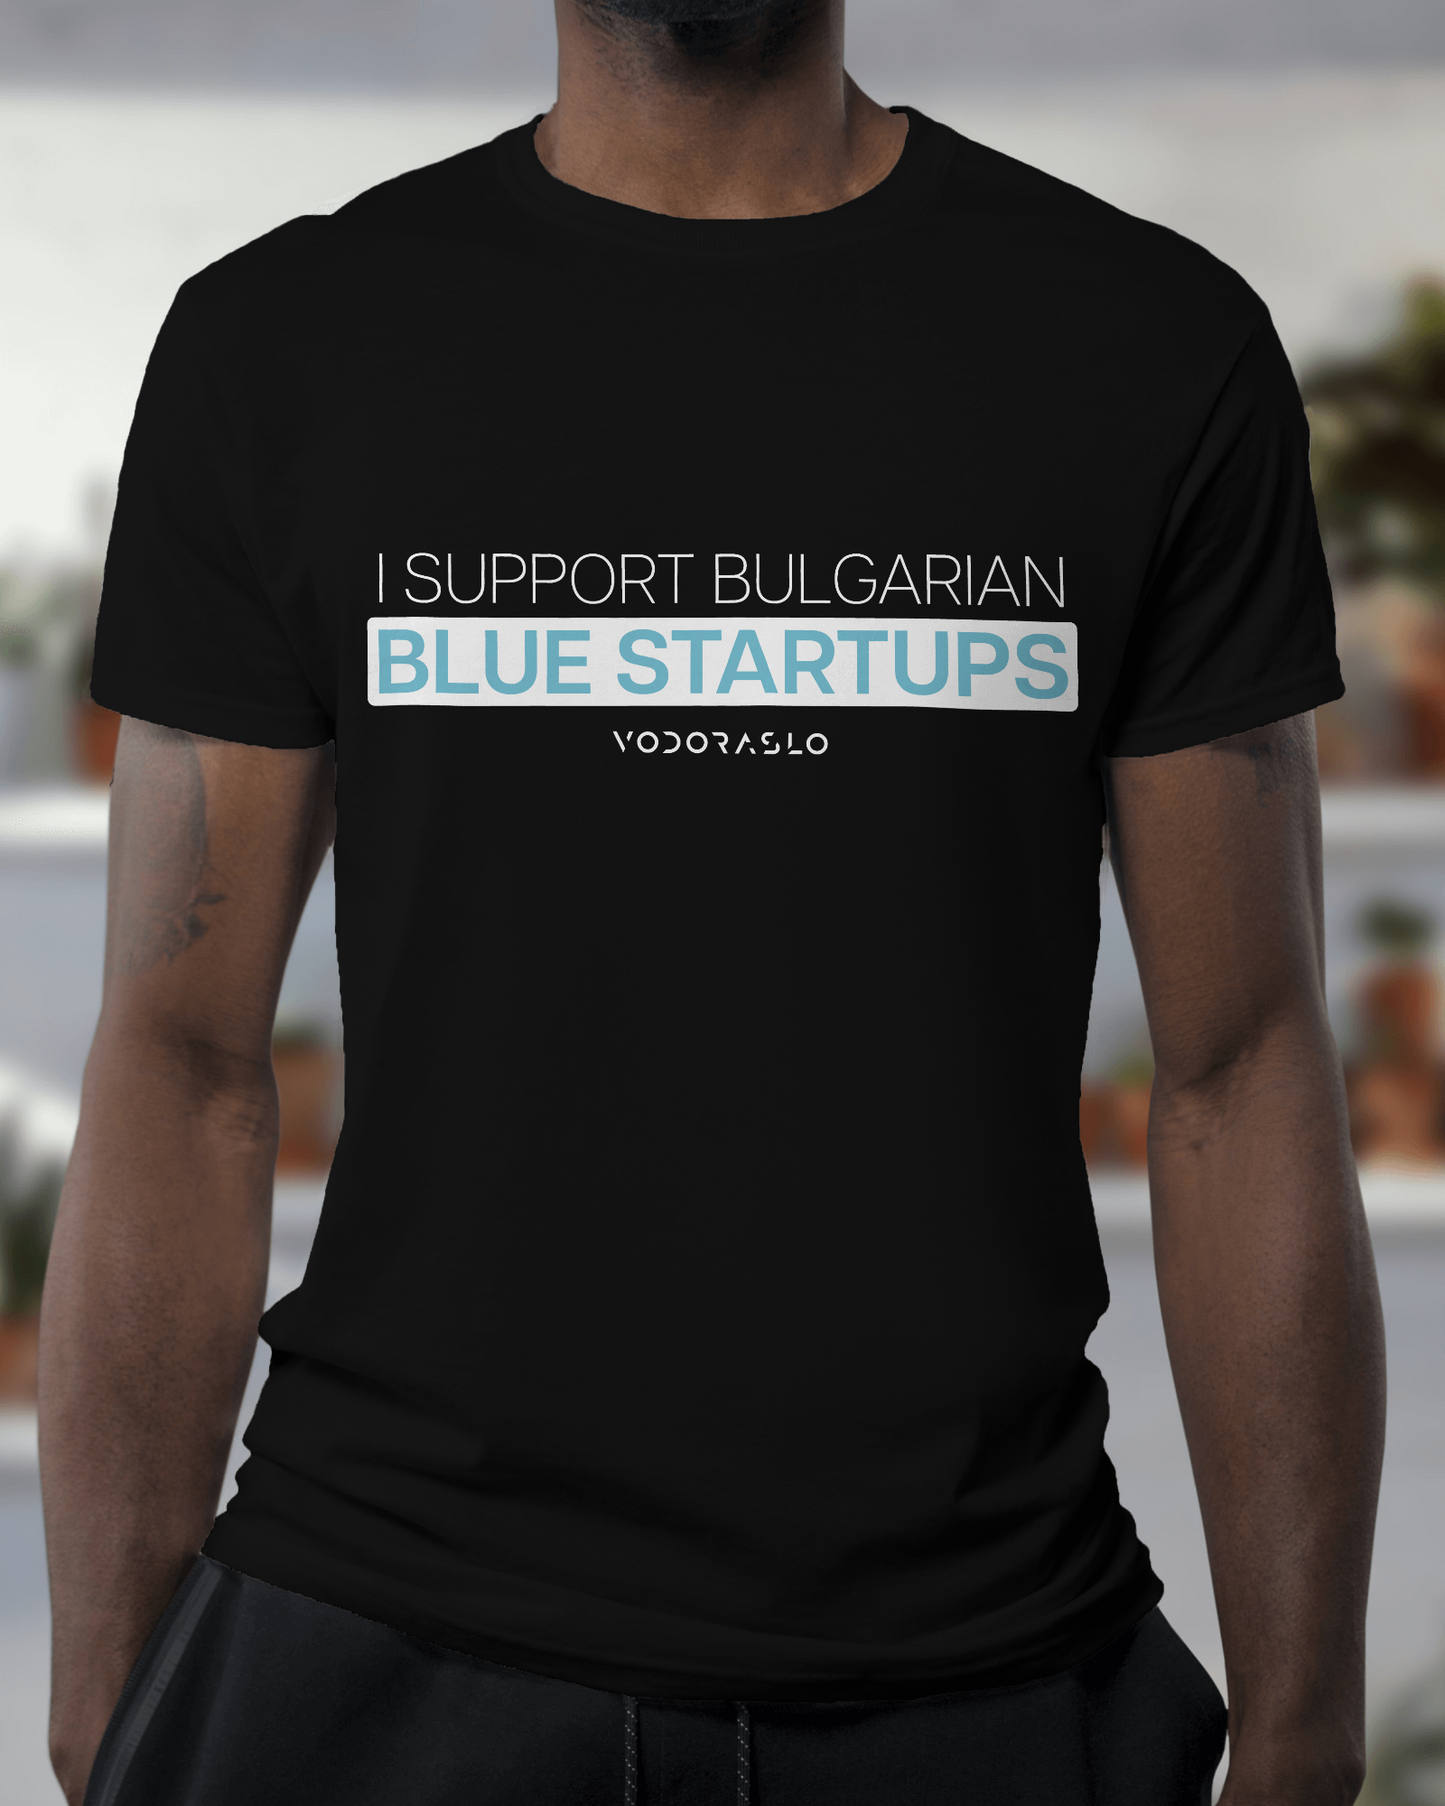 T-shirt "I support Bulgarian blue startups"